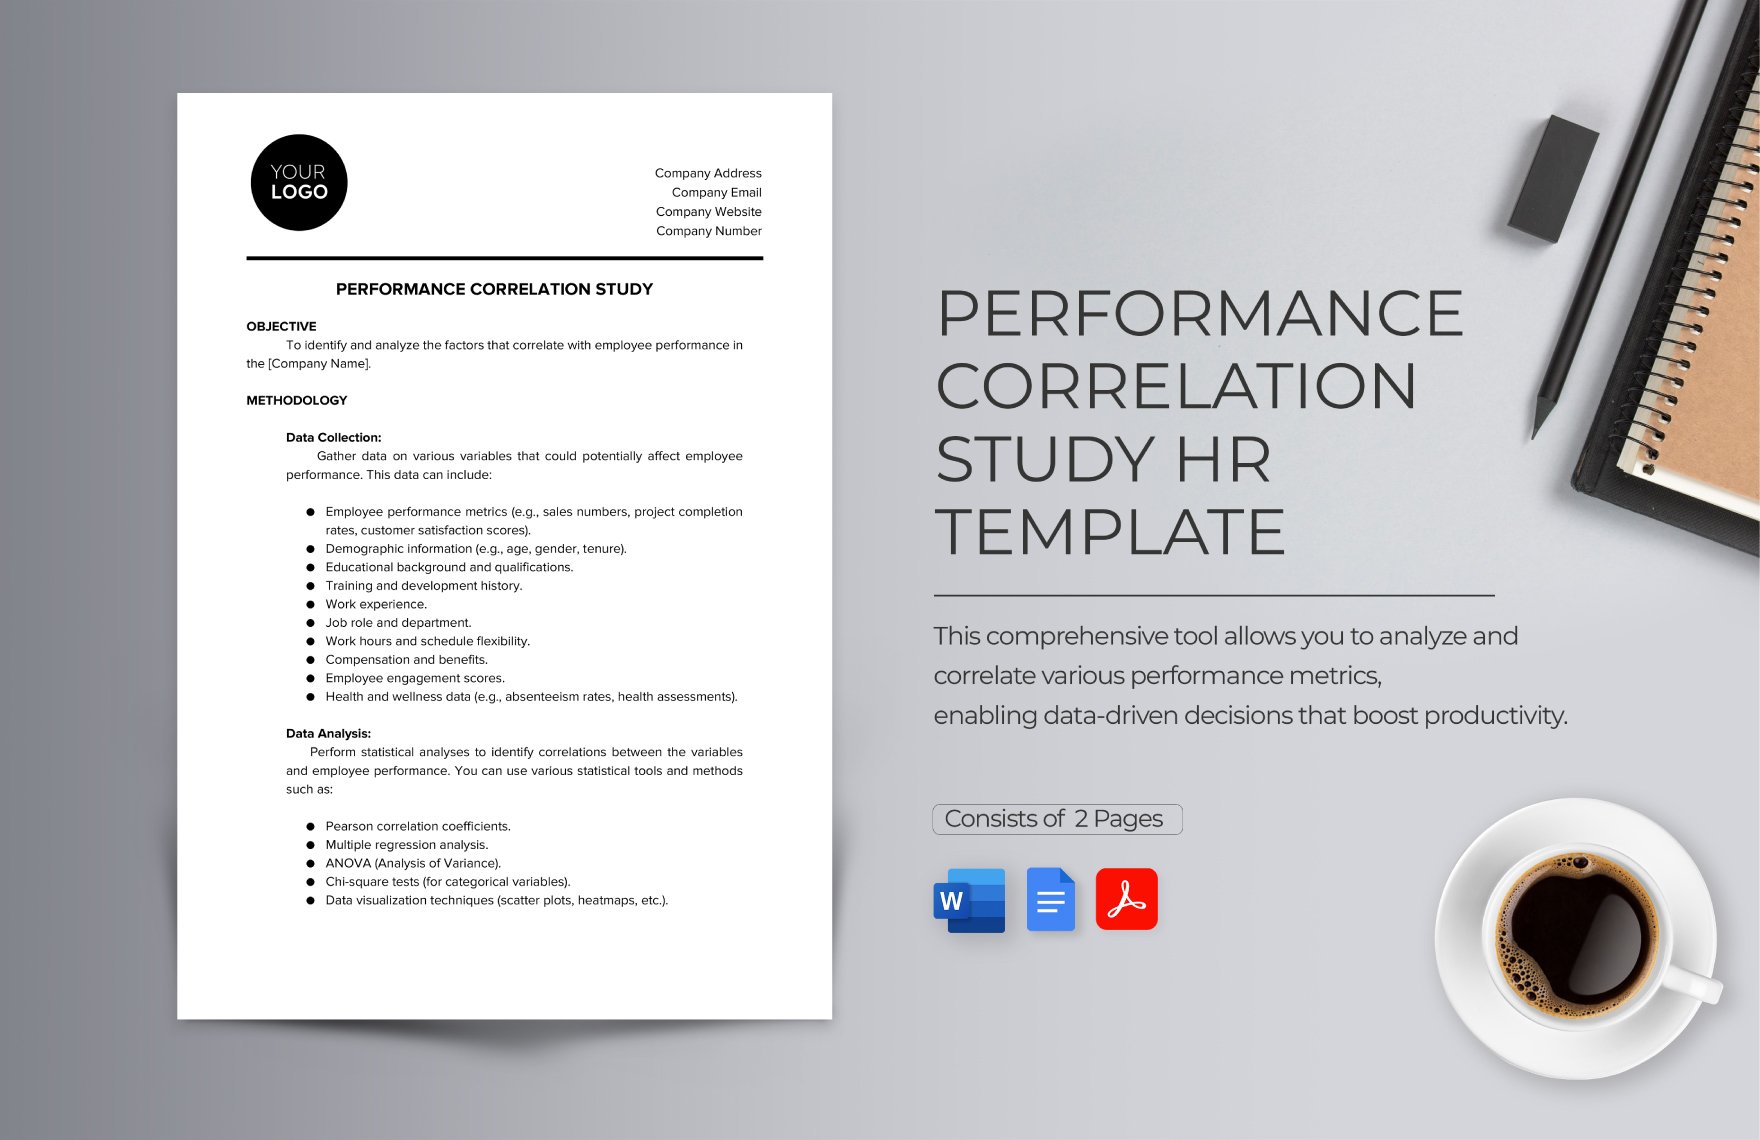 Performance Correlation Study HR Template